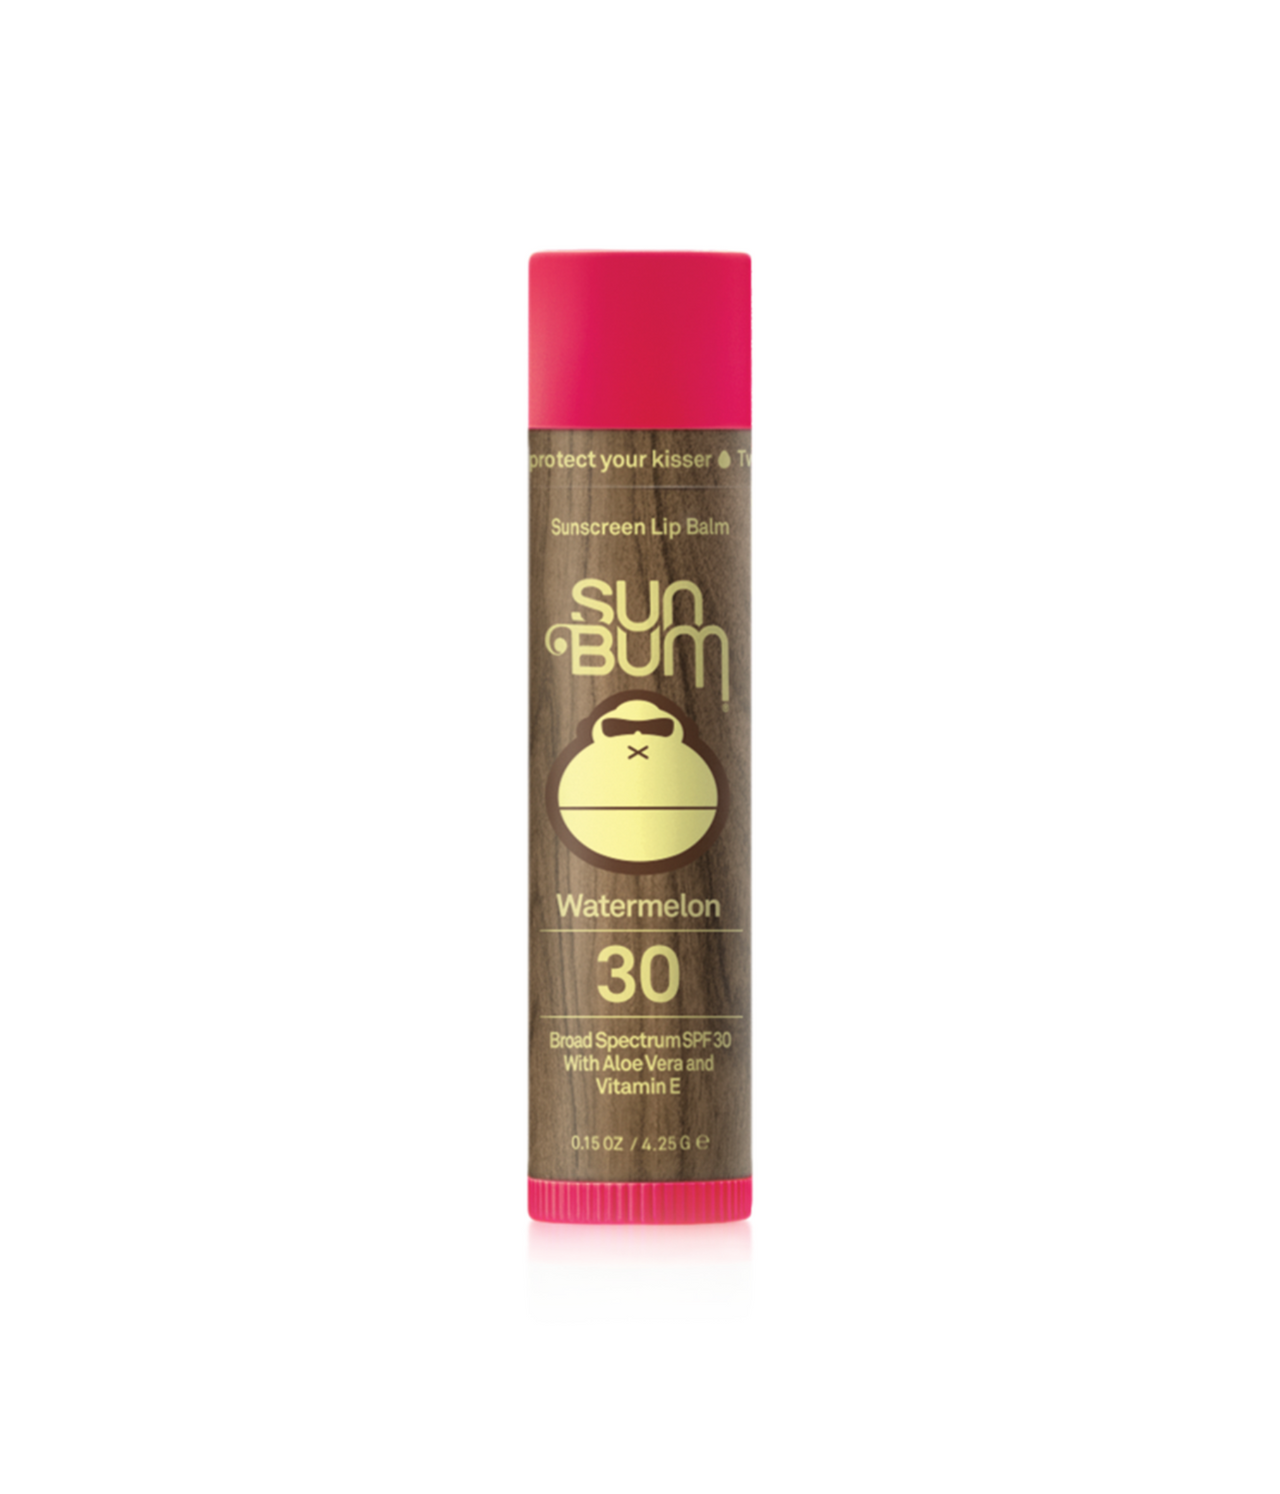 Sun Bum - Original SPF 30 Sunscreen Lip Balm - Watermelon 0.15oz